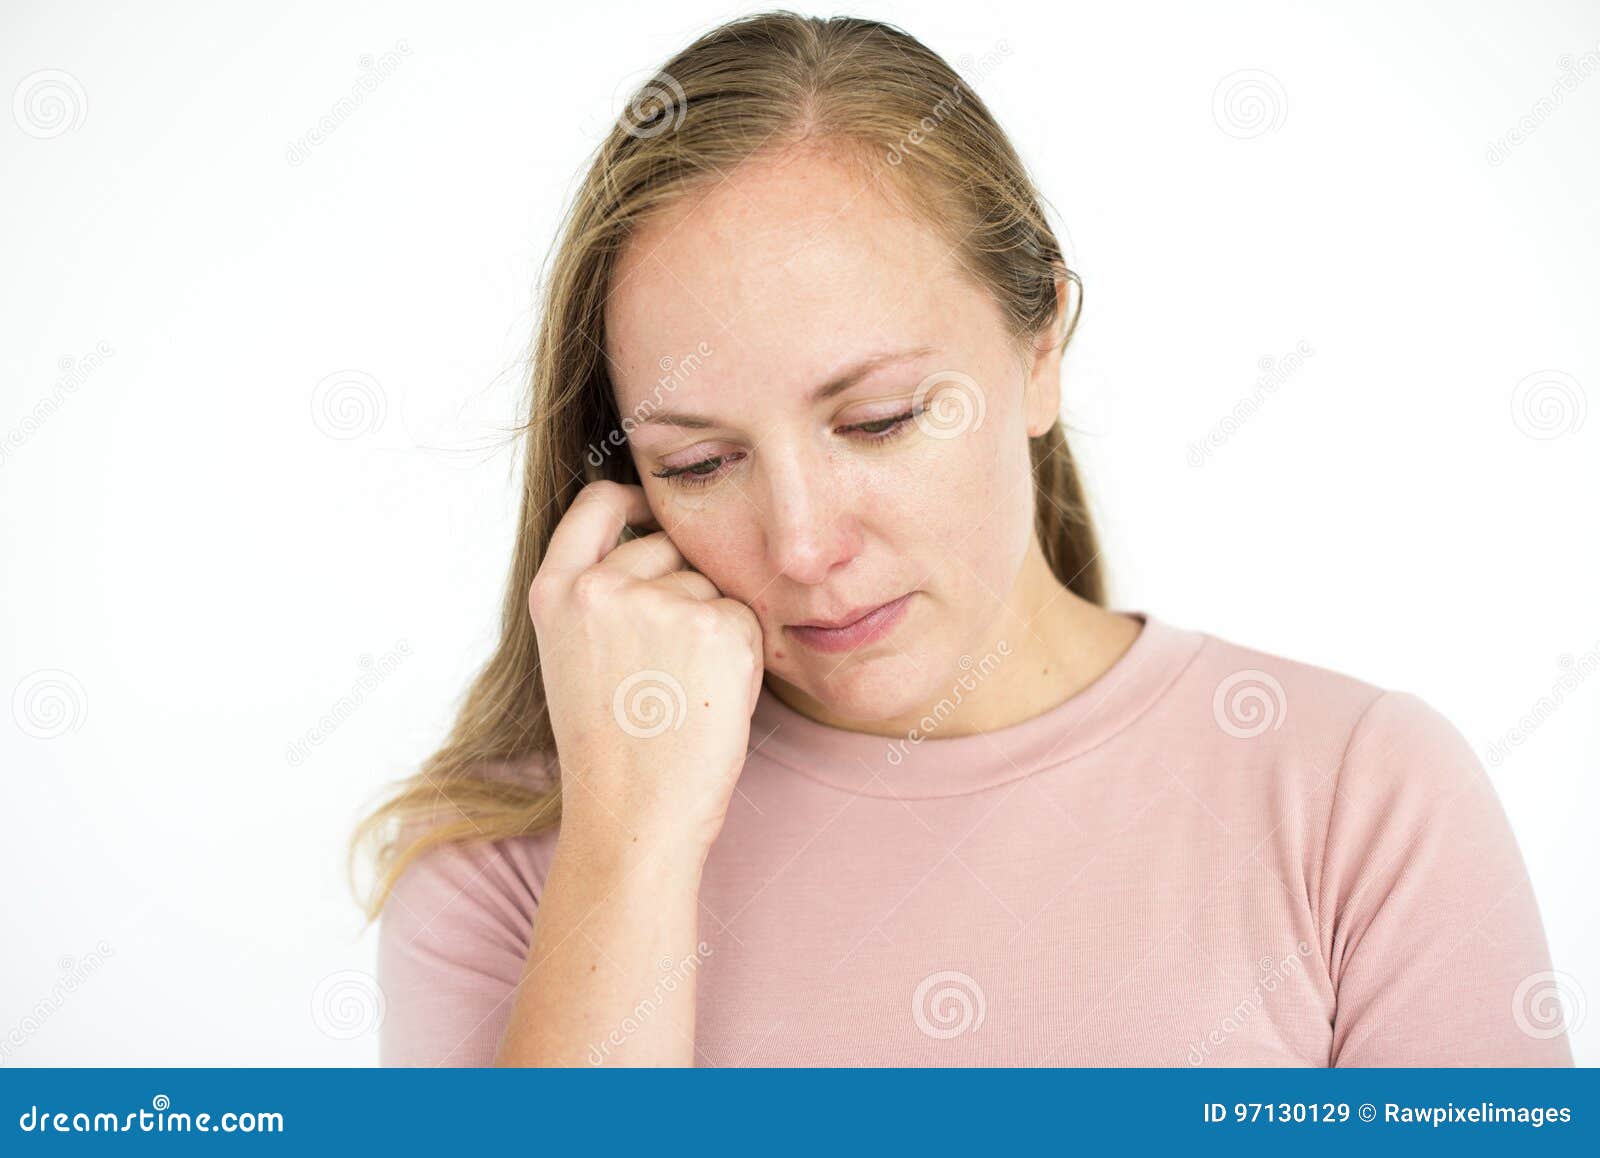 woman sad crying depress portrait concept